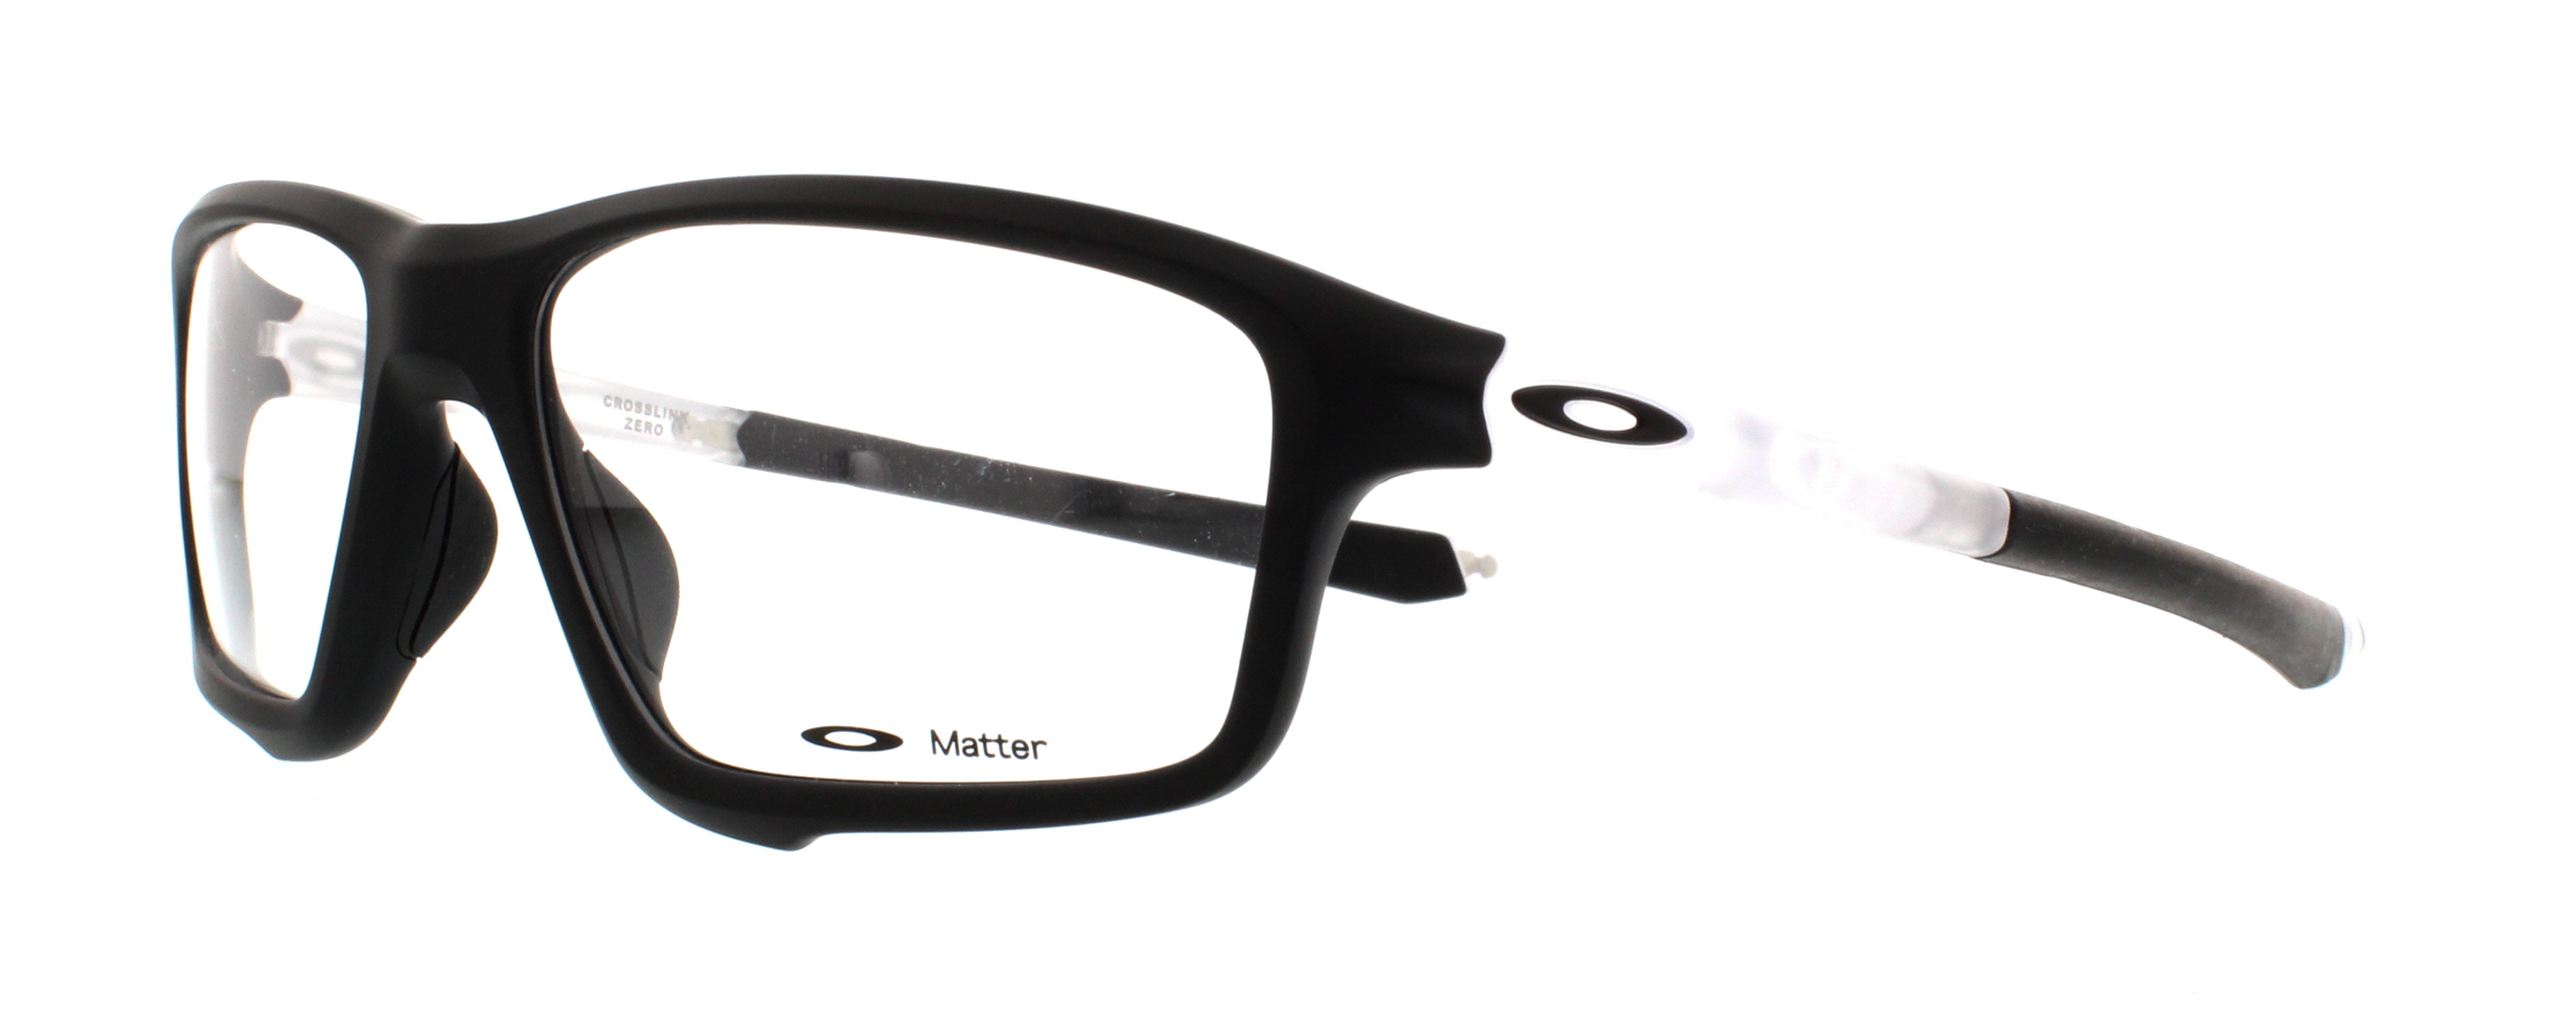 Picture of Oakley Eyeglasses CROSSLINK ZERO